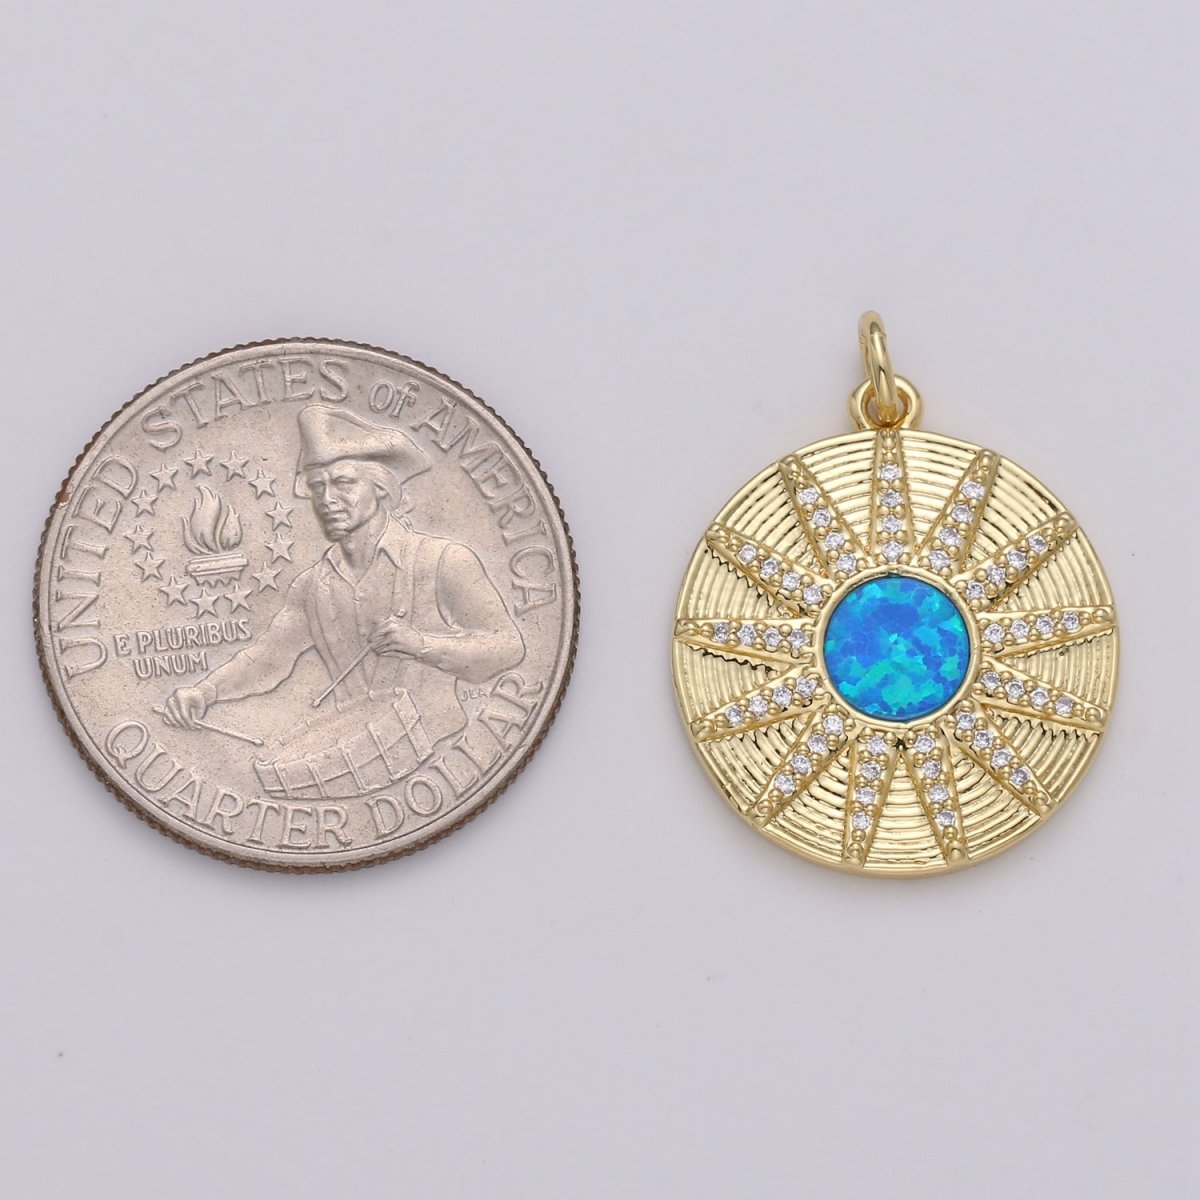 Dainty 14k Gold Filled Vergina Sun Charm Blue Opal Round SunBurst Medallion Pendant, 25x20mm, Micro Pave Gold Sun Celestial Jewelry D-472 - DLUXCA